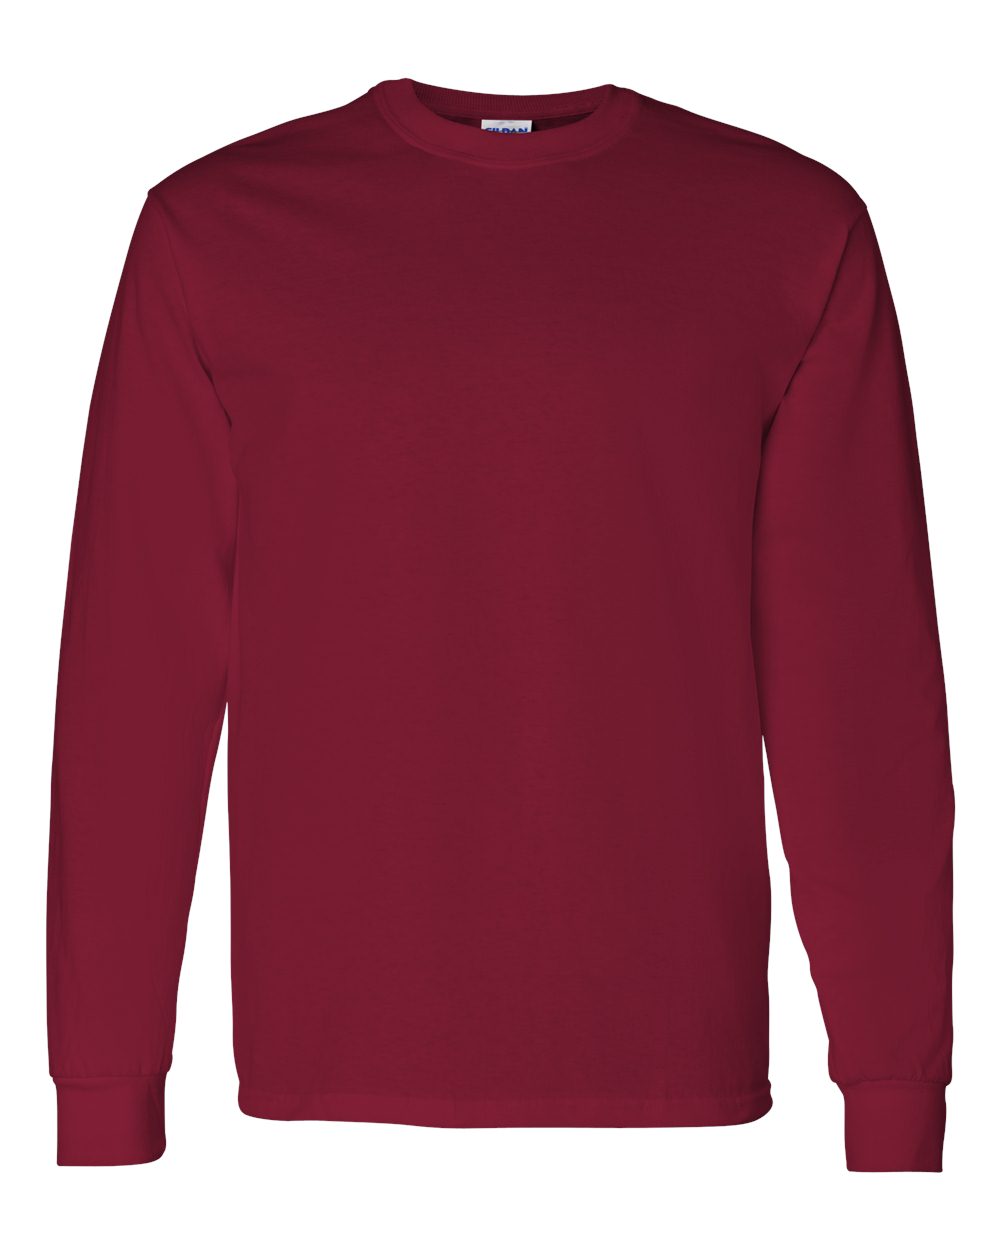 Gildan 5400 Heavy Cotton 5.3 oz. Long-Sleeve T-Shirt $6.10 - T-Shirts